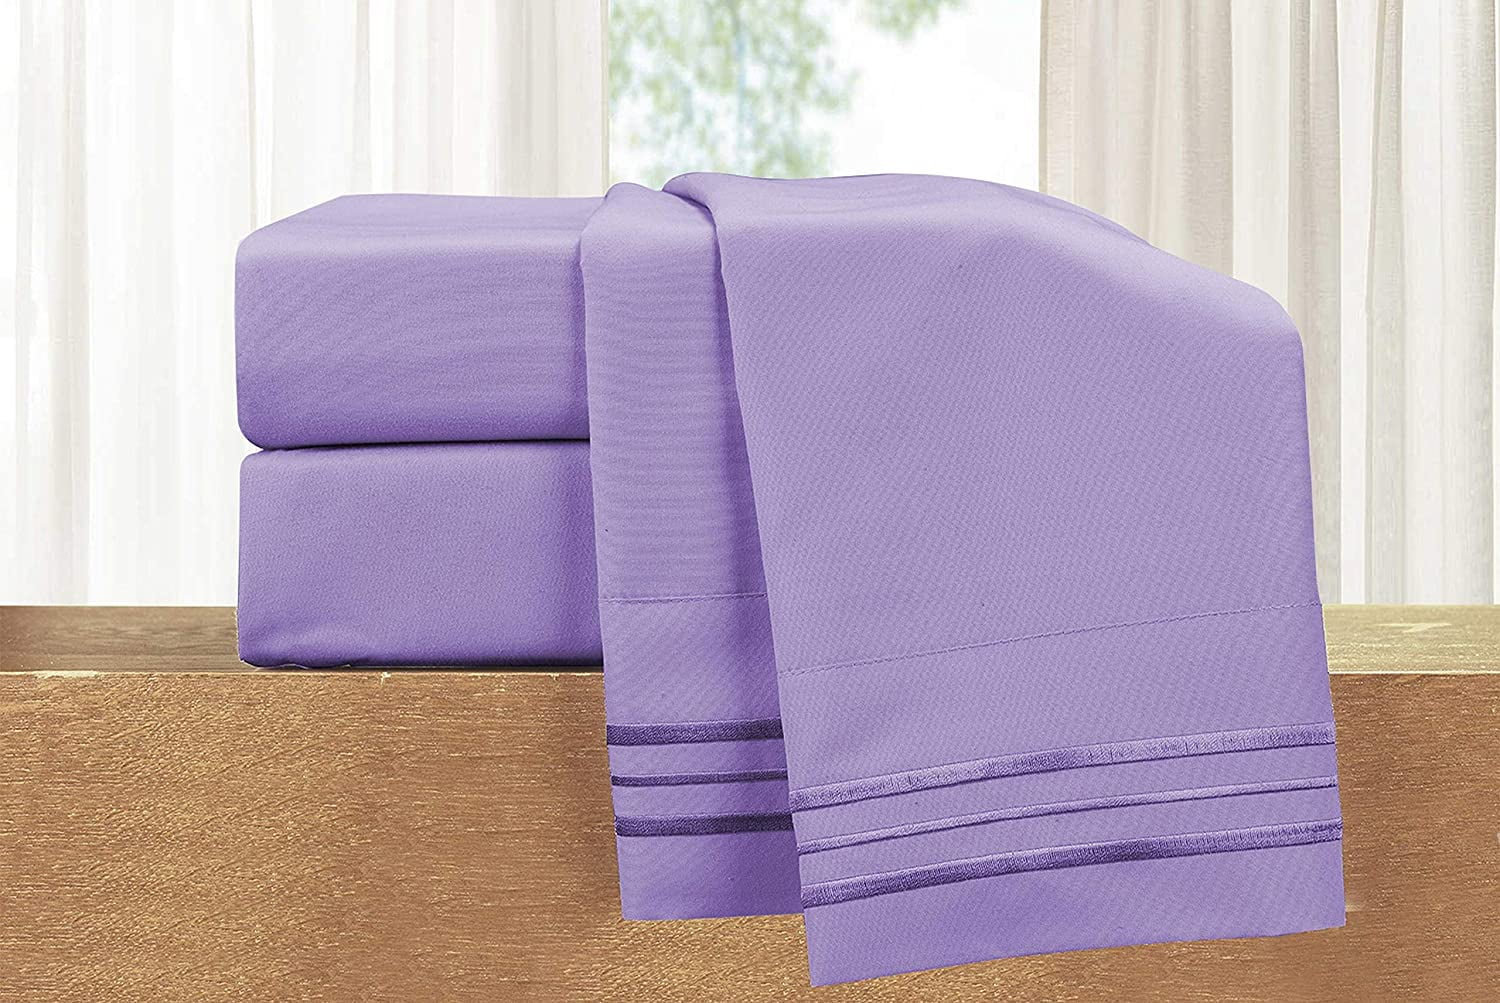 Elegante Comfort 4-PACK Almofadas Sólidas 1500 Thread Count